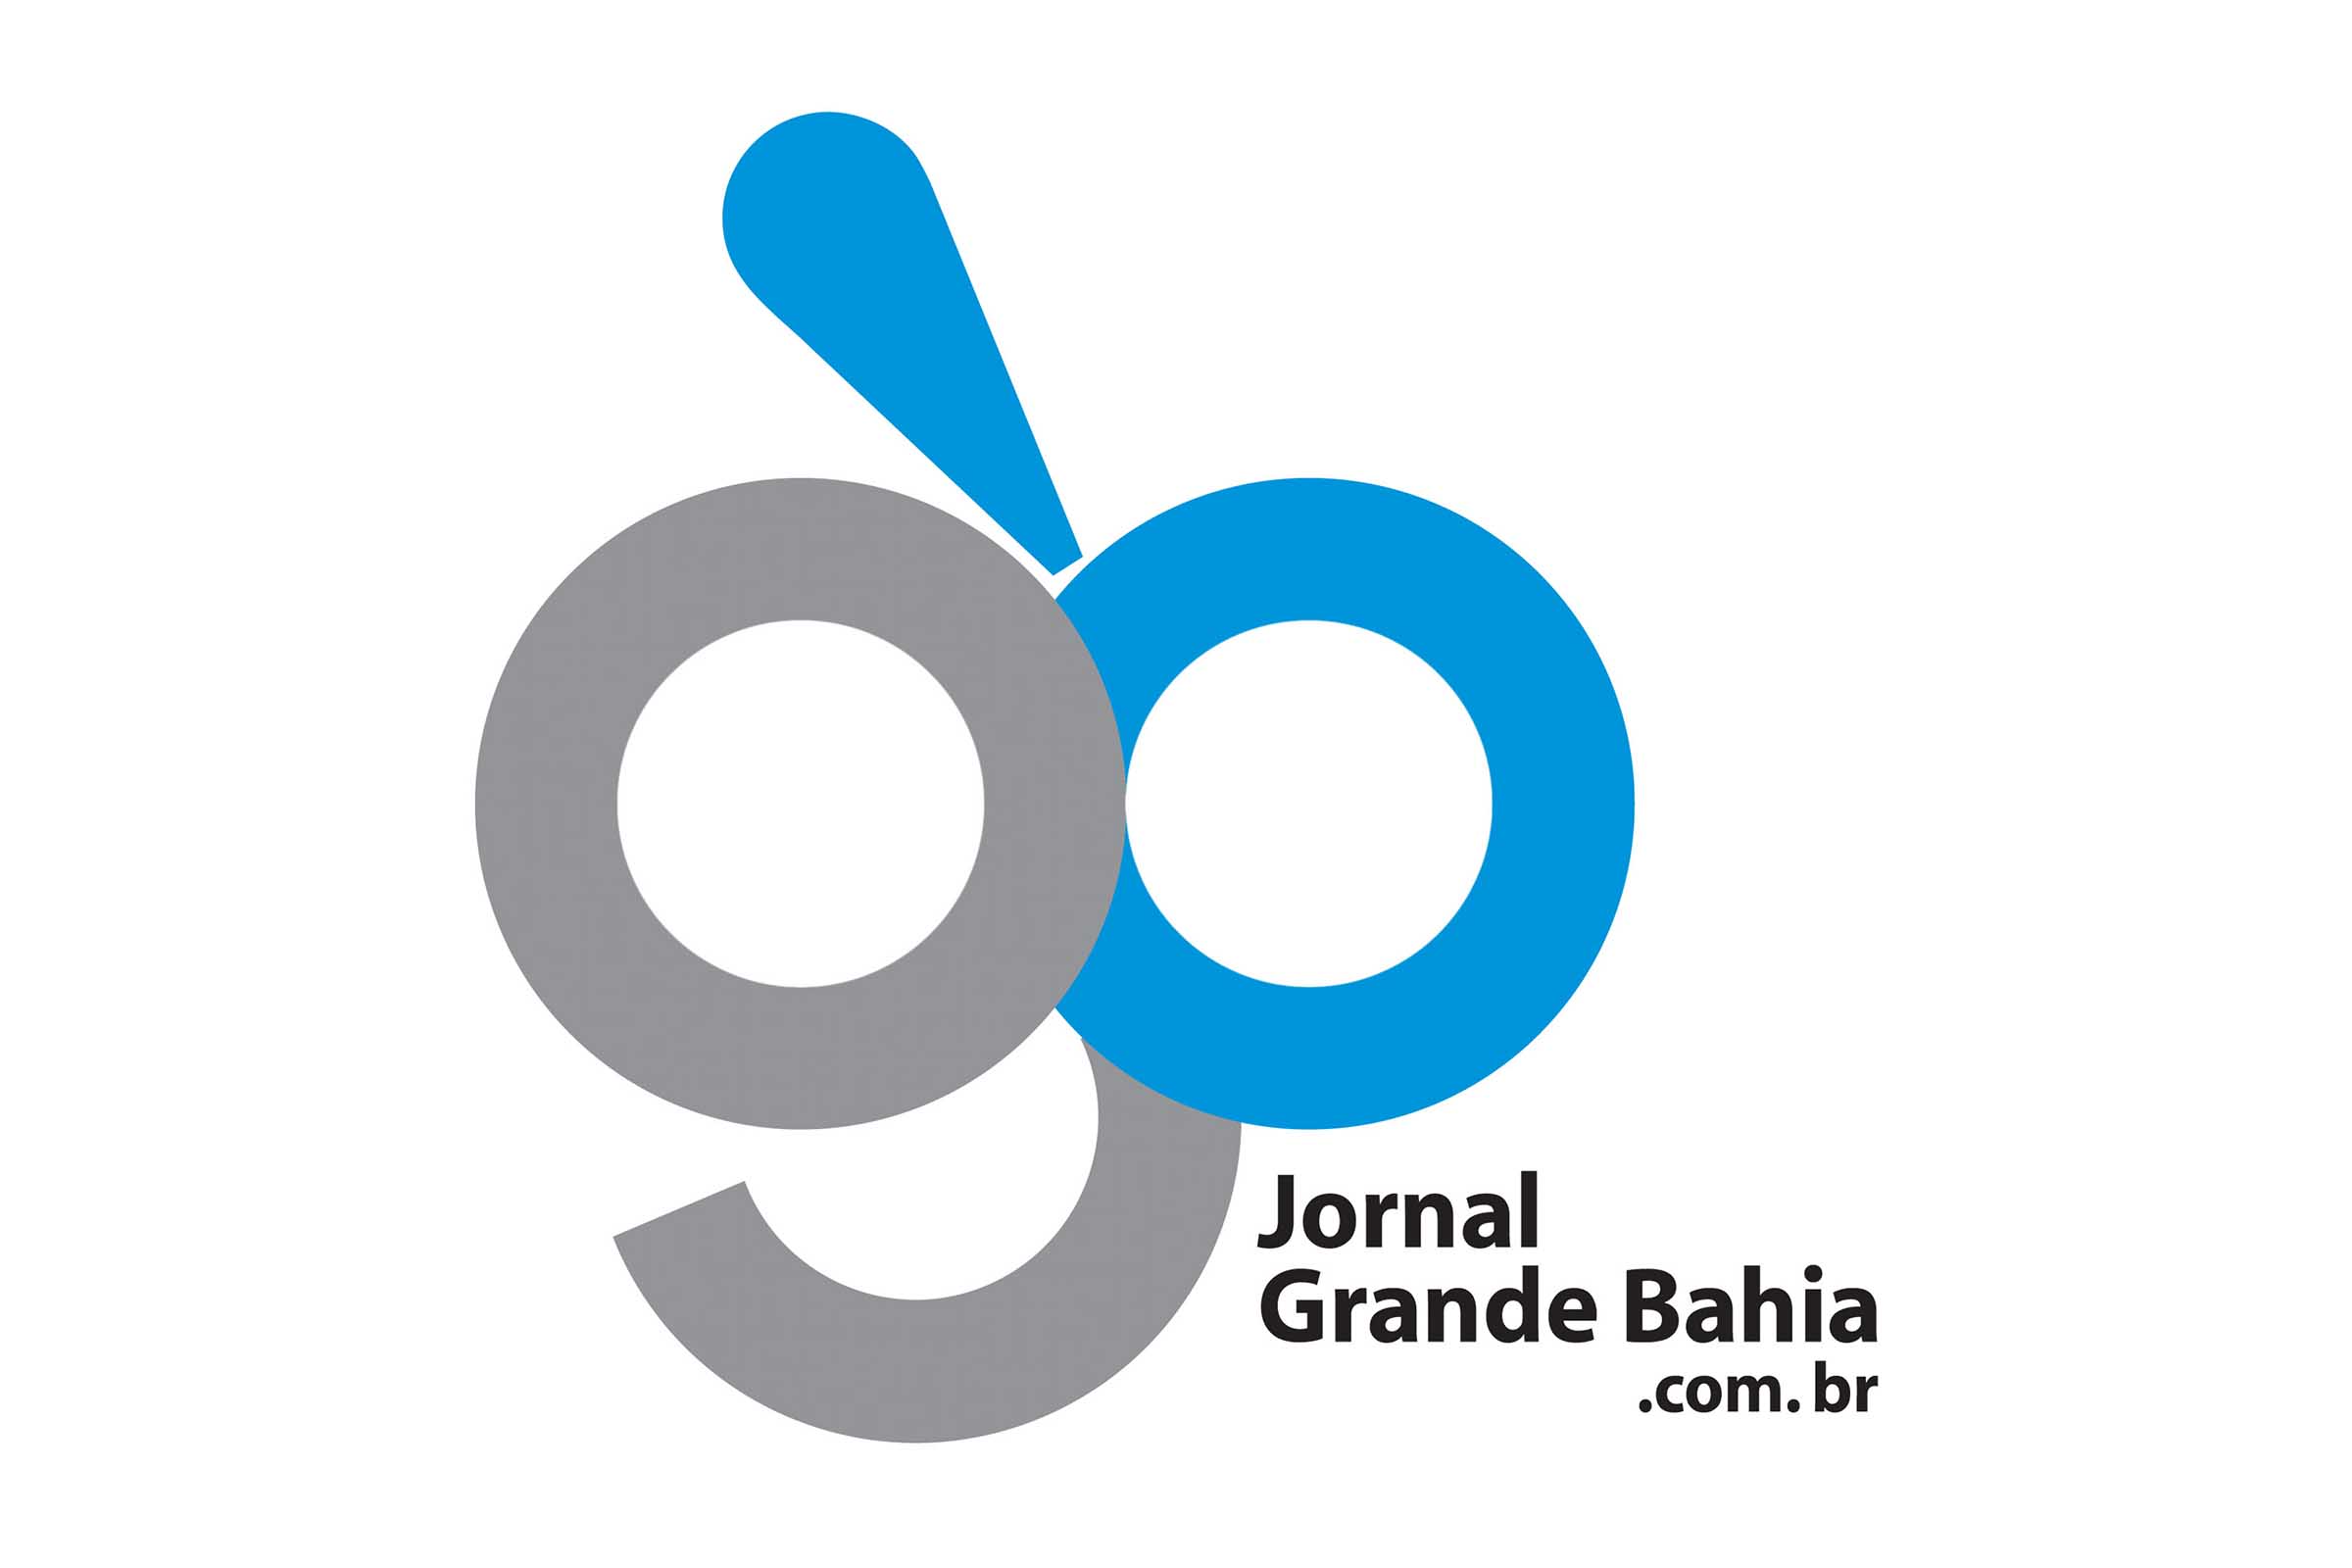 Jornal Grande Bahia, compromisso em informar.